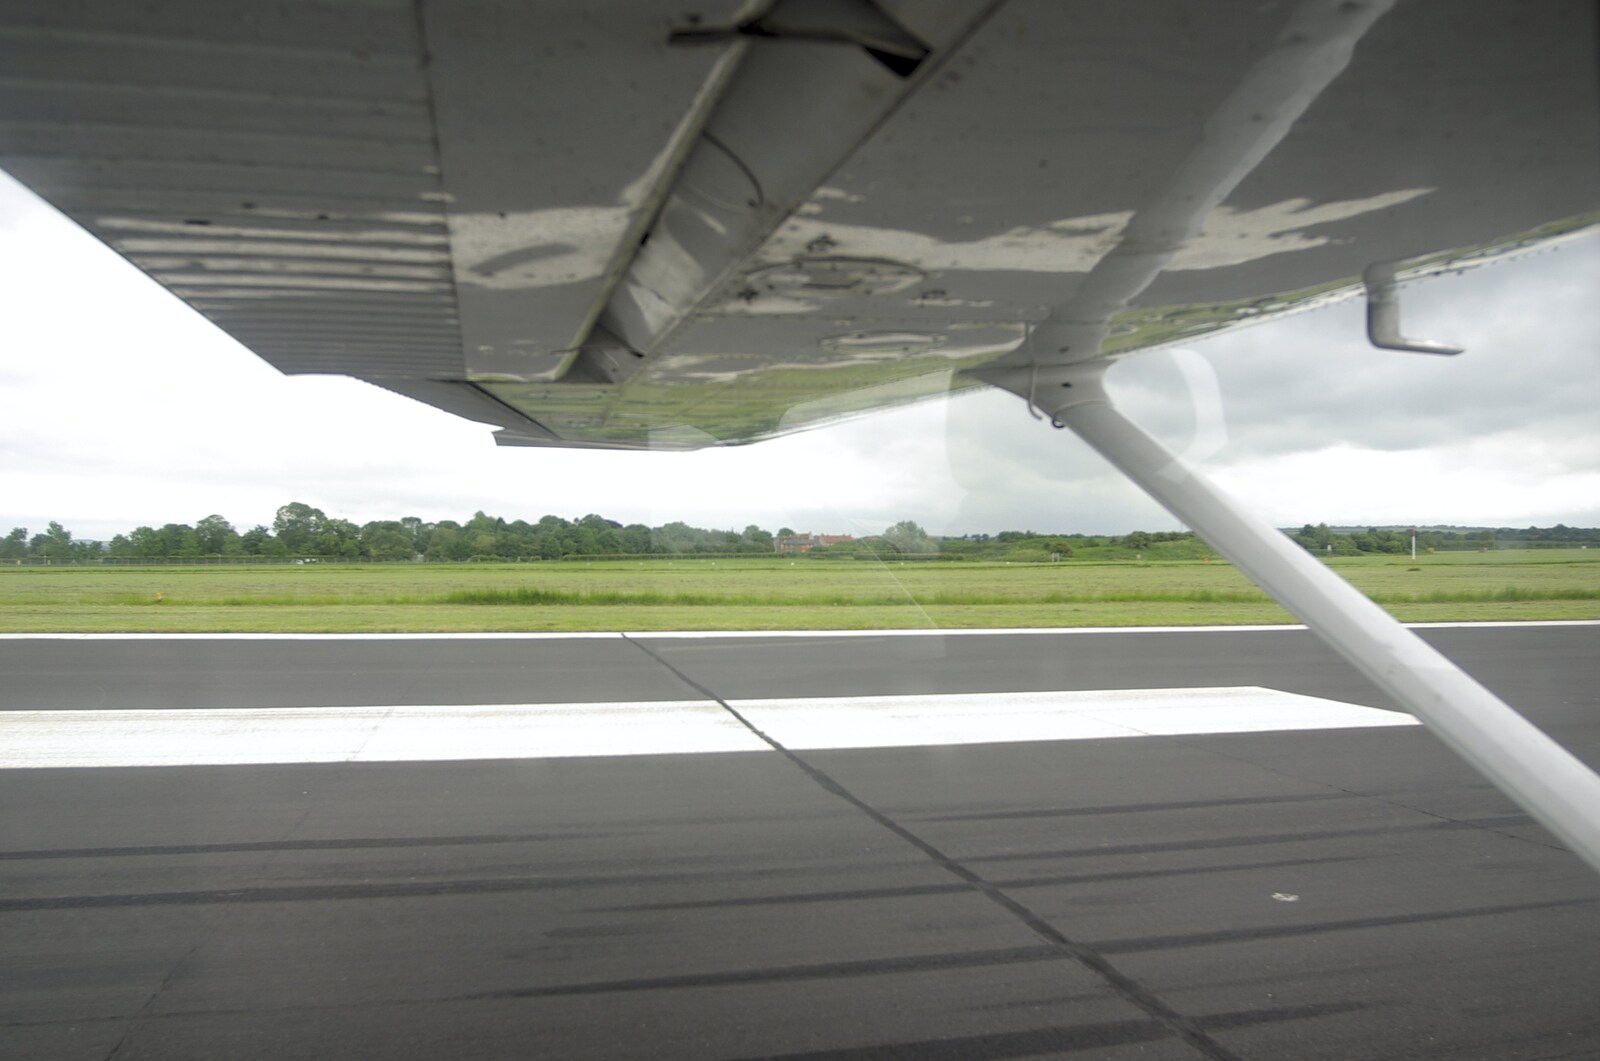 Nosher Flies a Plane, Cambridge Airport, Cambridge - 28th May 2008: The Cessna rolls up Cambridge Airport's runway